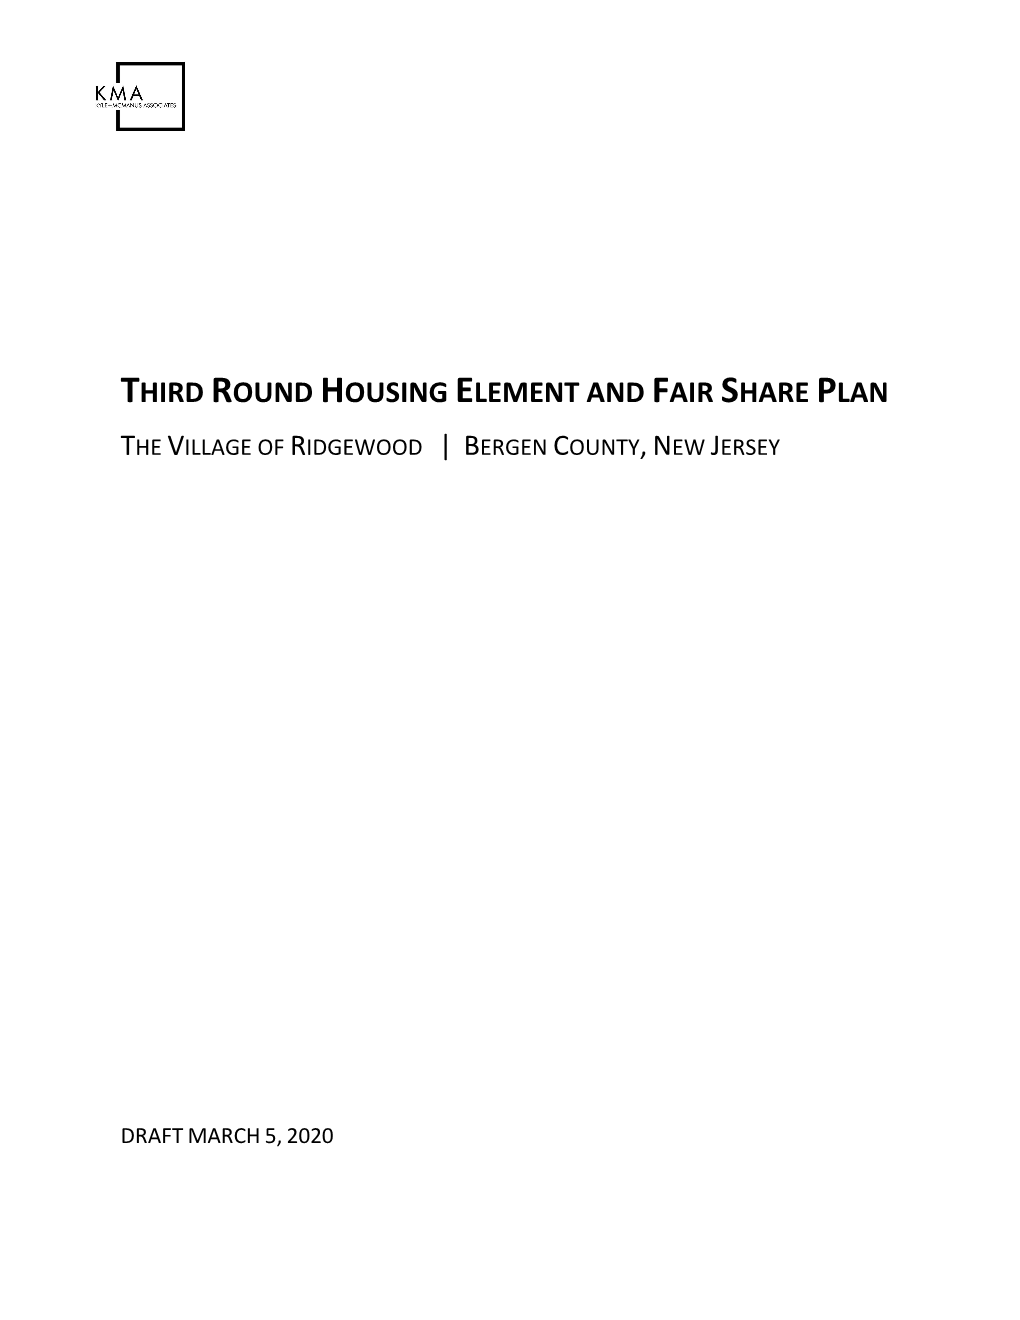 Third Round Housing Element and Fair Share Plan the Village of Ridgewood | Bergen County, New Jersey